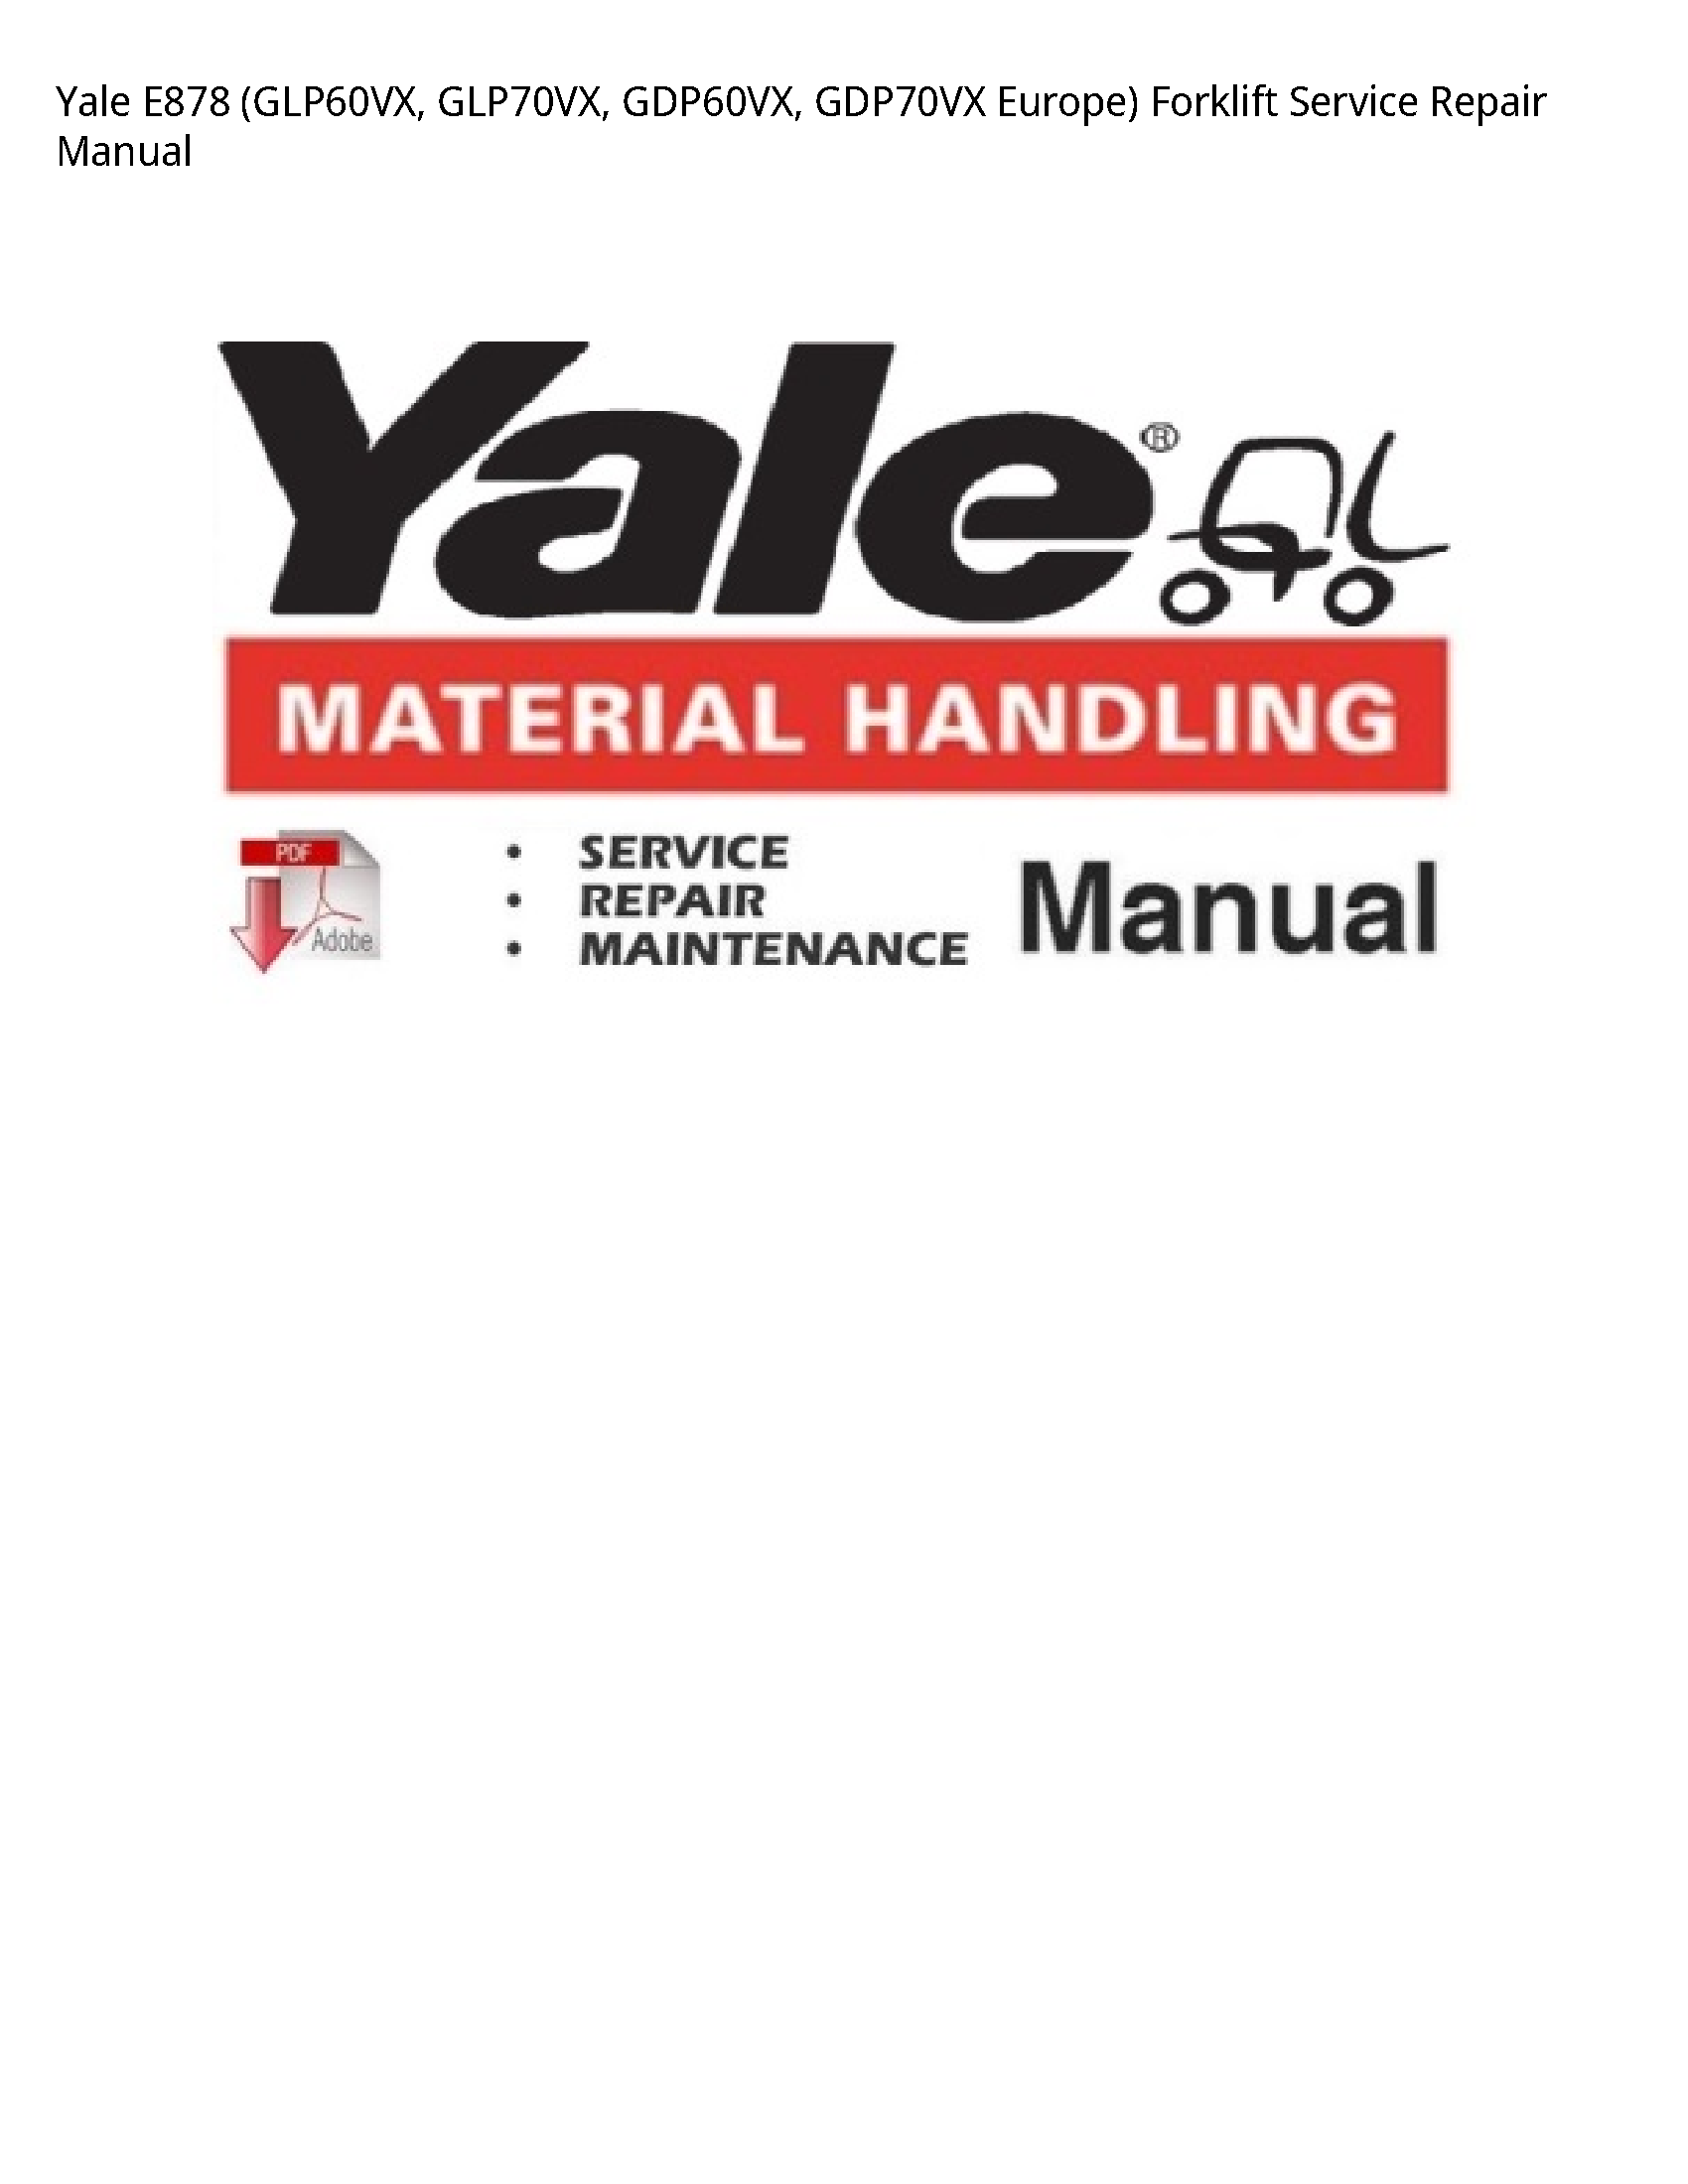 Yale E878 Europe) Forklift manual